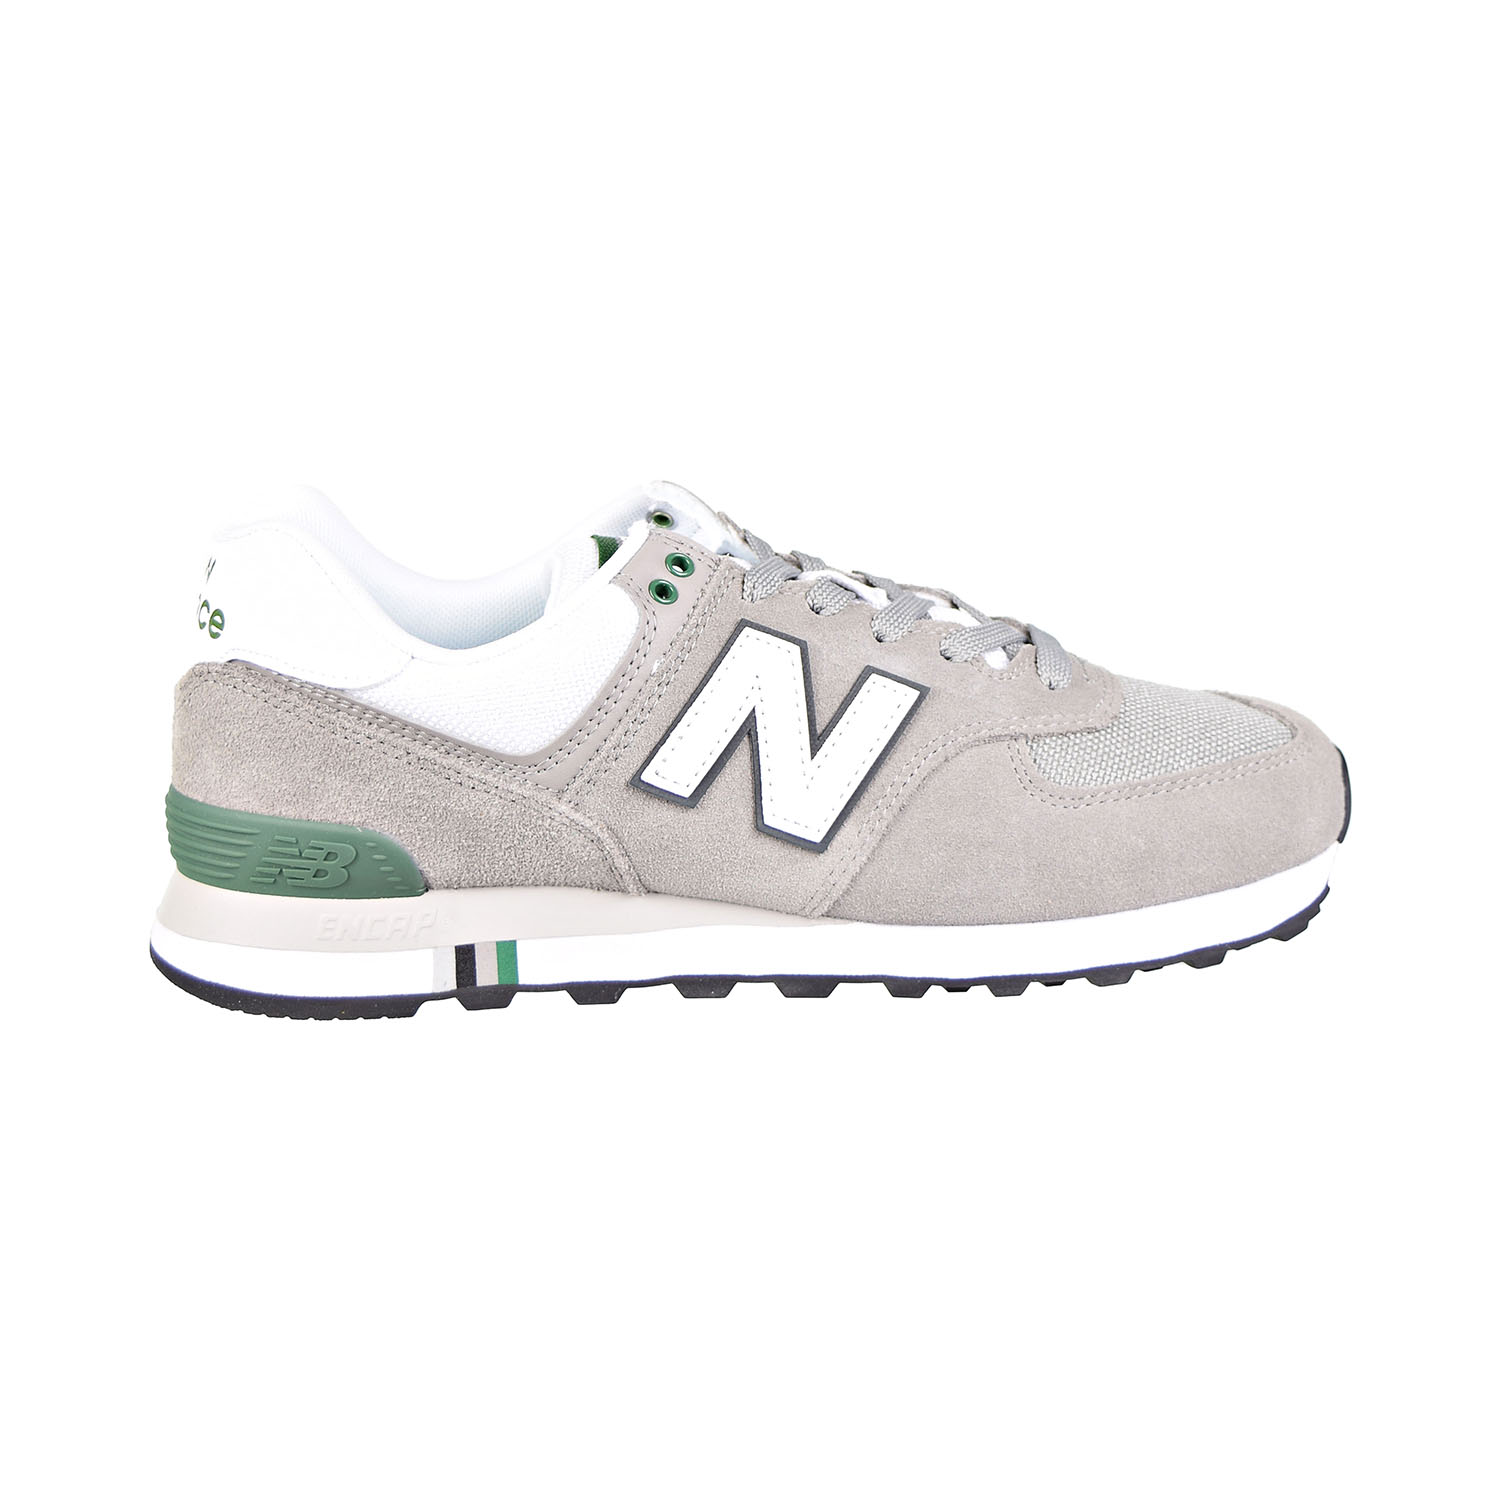 New Balance 574 мужская обувь серый/белый/темно-зеленый ML574-MTG | eBay